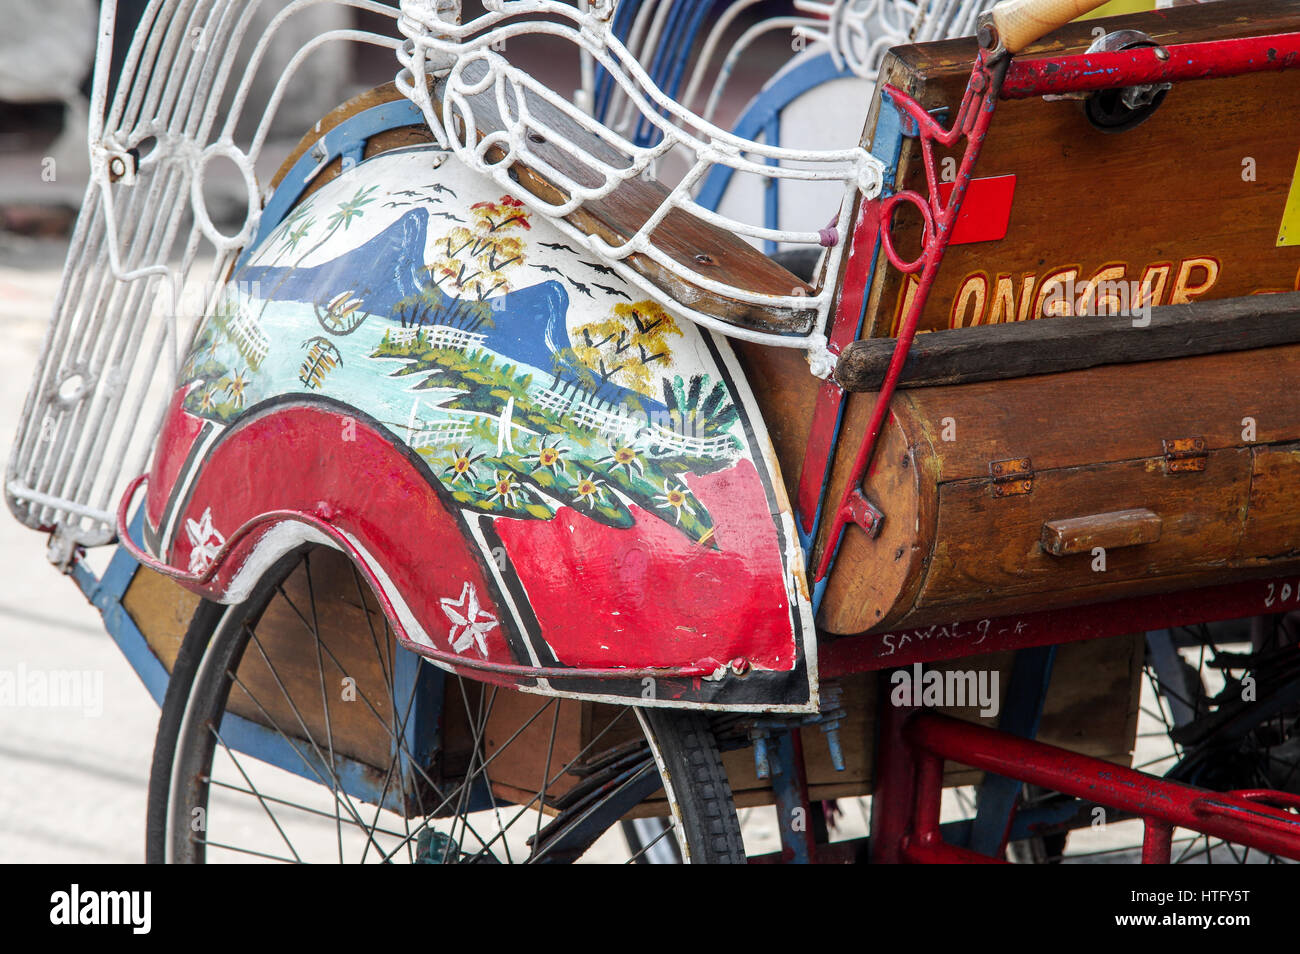 Schön bemalten Kotflügel eine Fahrradrikscha Yogyakarta - Java, Indonesien Stockfoto